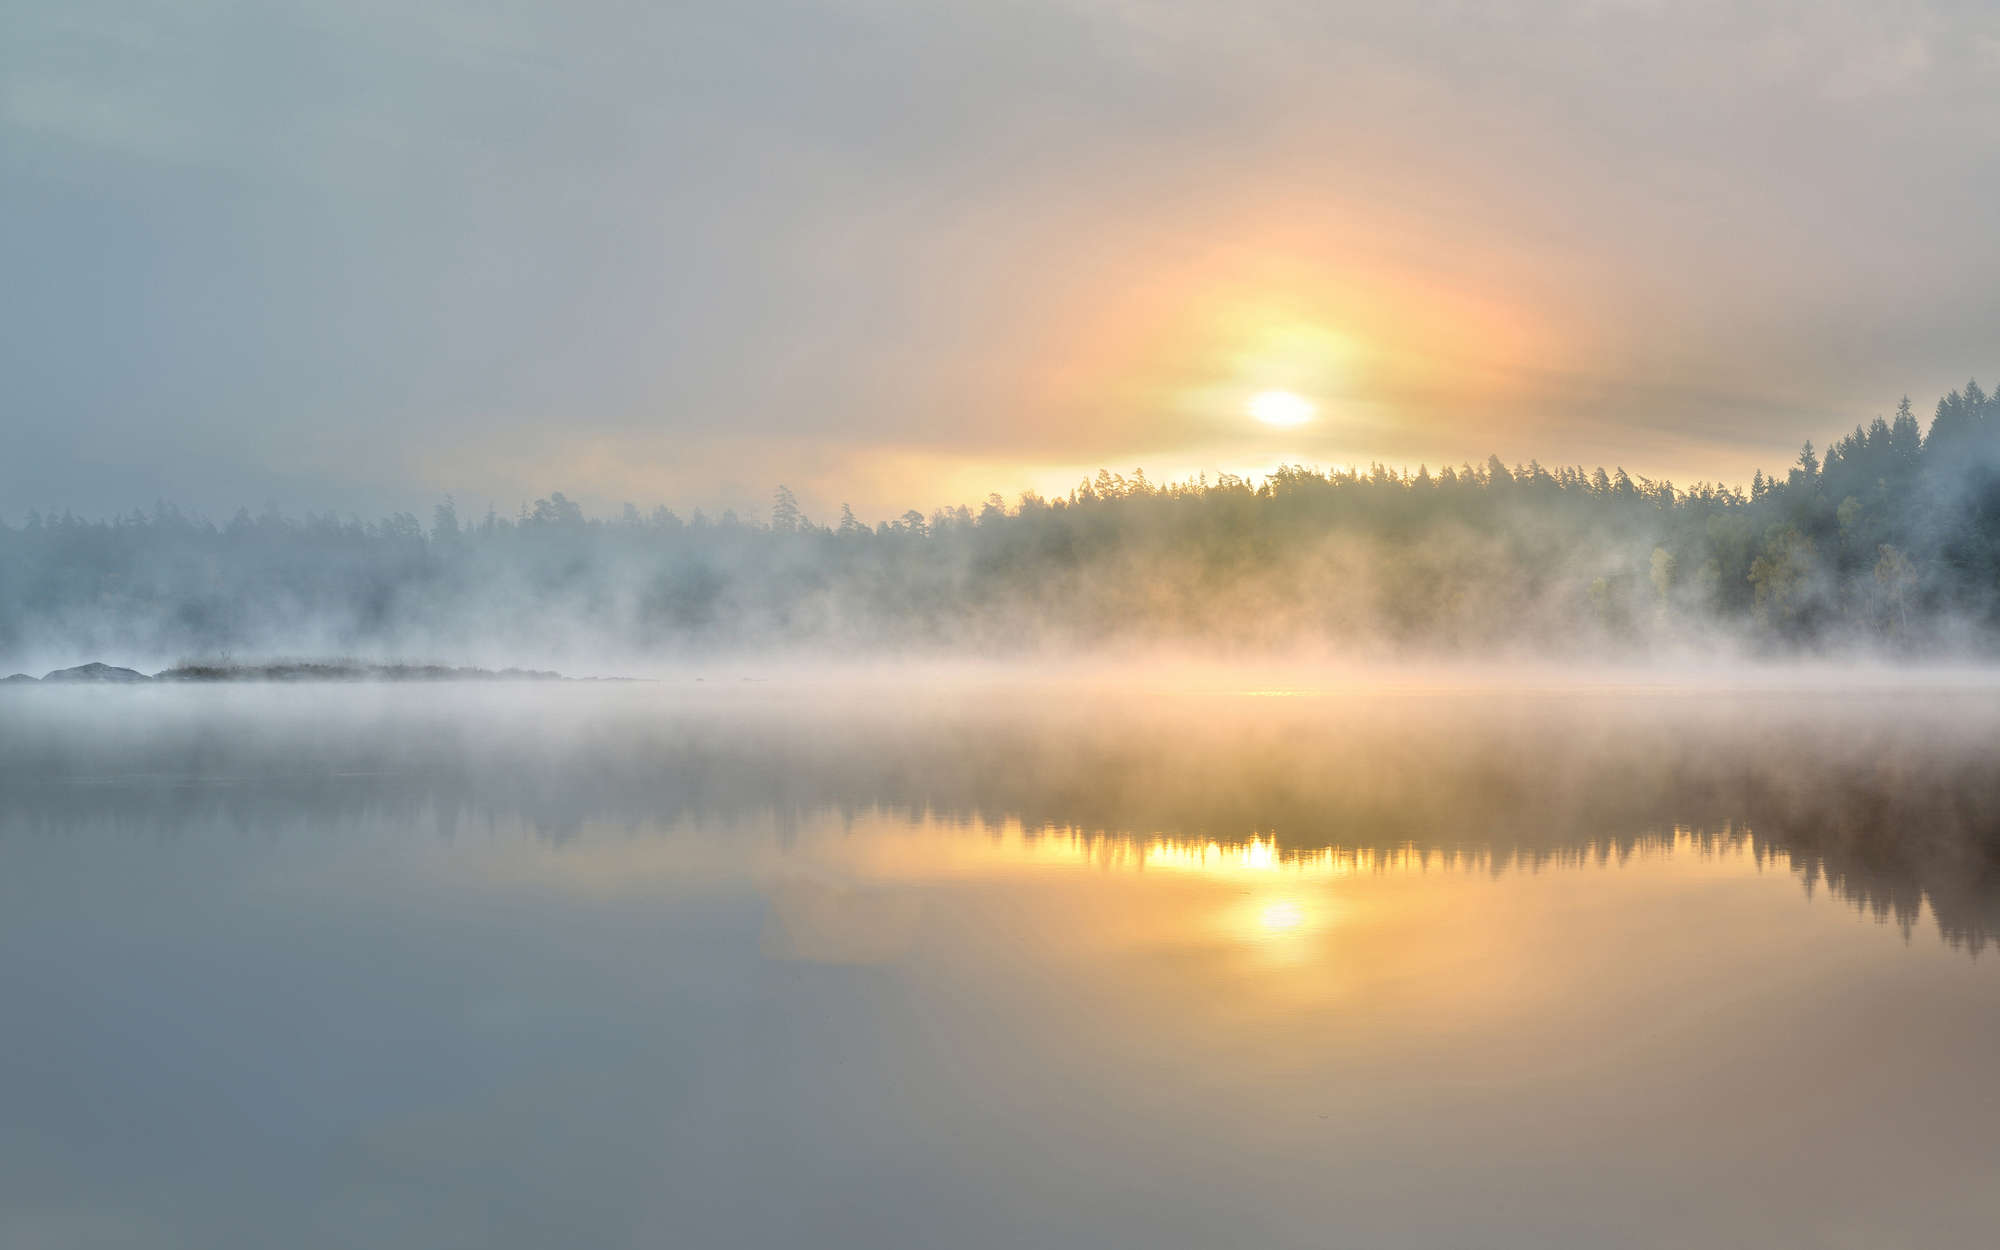             Fotomural Mañana de niebla en el lago - vellón liso nacarado
        